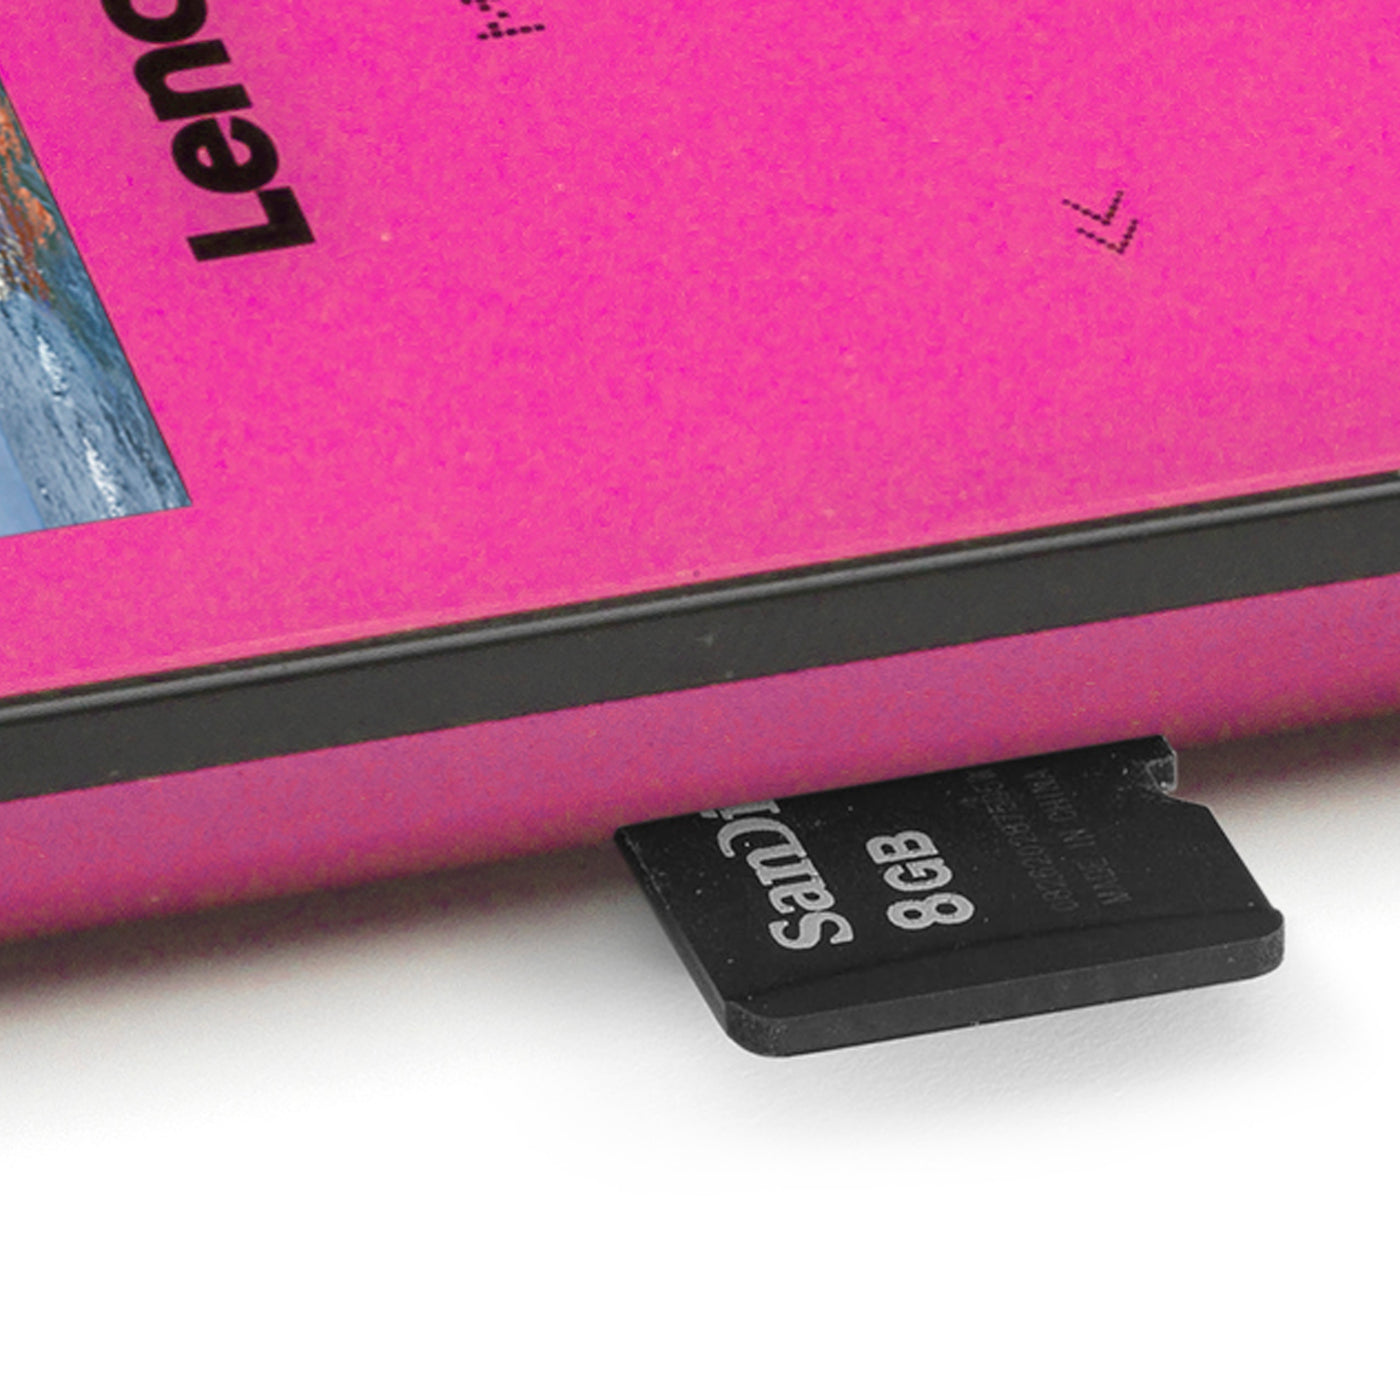 memory - LENCO - with Lenco-Catalog MP3/MP4 Xemio-655 – Pink Pink 4GB Player